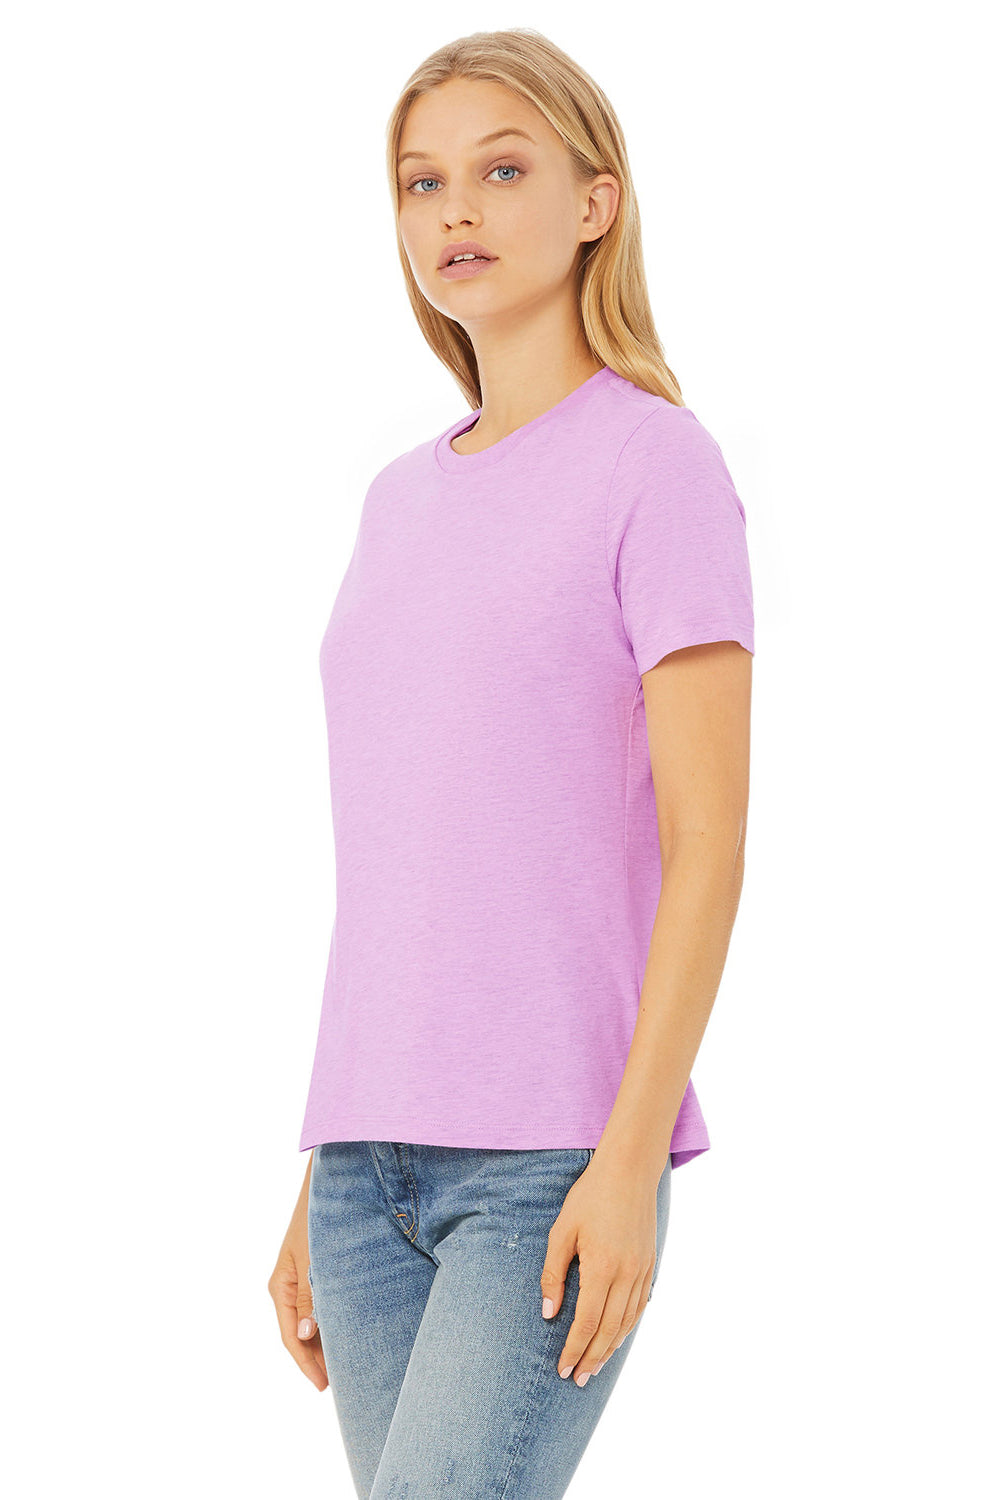 Bella + Canvas BC6400CVC/6400CVC Womens CVC Short Sleeve Crewneck T-Shirt Heather Prism Lilac Model 3Q